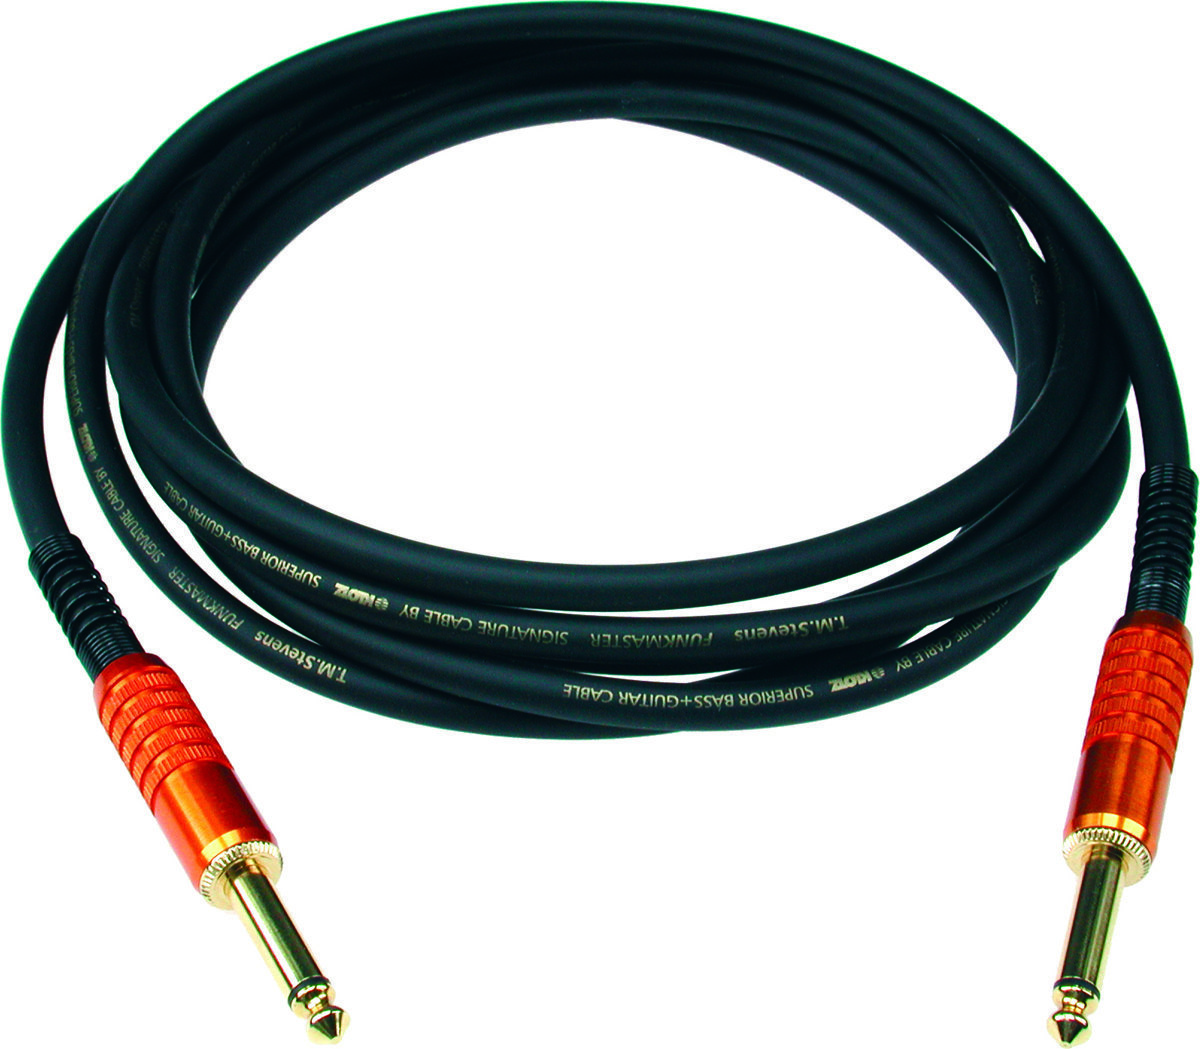 Instrument Cable Klotz TM-0900 T.M. Stevens FunkMaster Black 9 m Straight - Straight